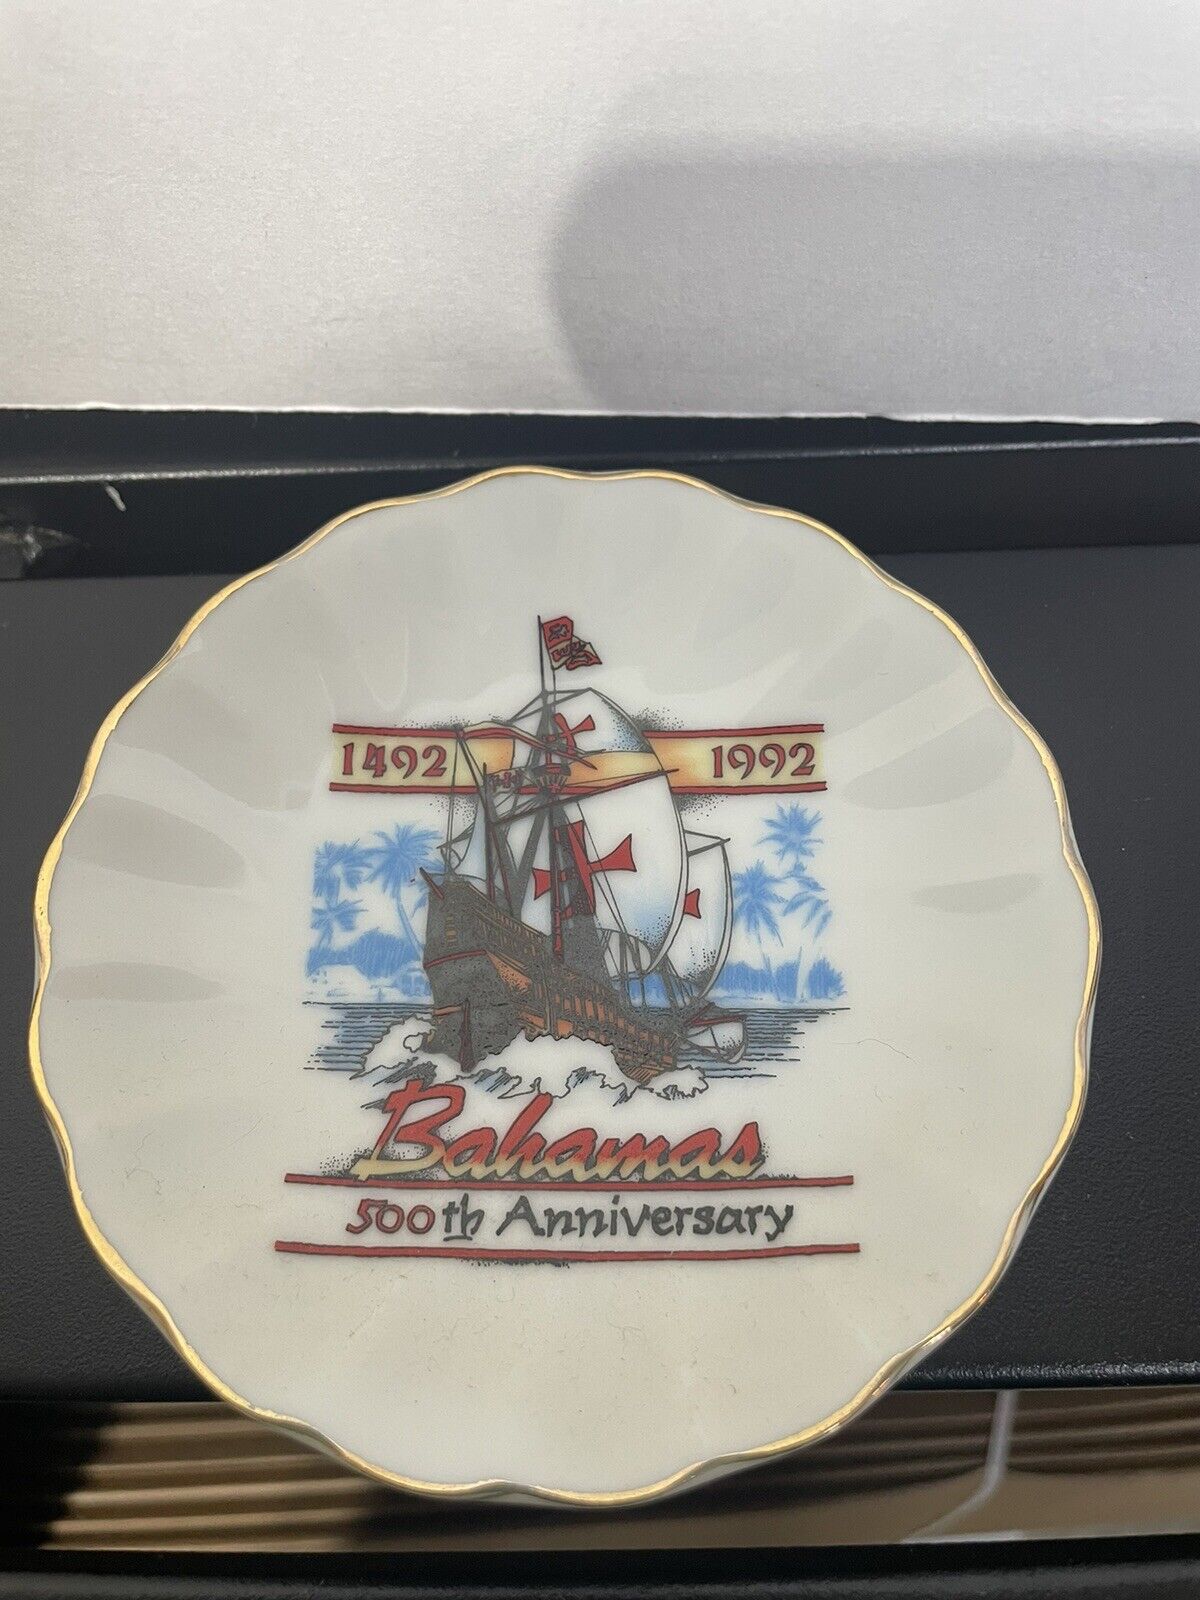 Bahamas 500th Anniversary 1492 - 1992 Souvenir Plate 4.25”